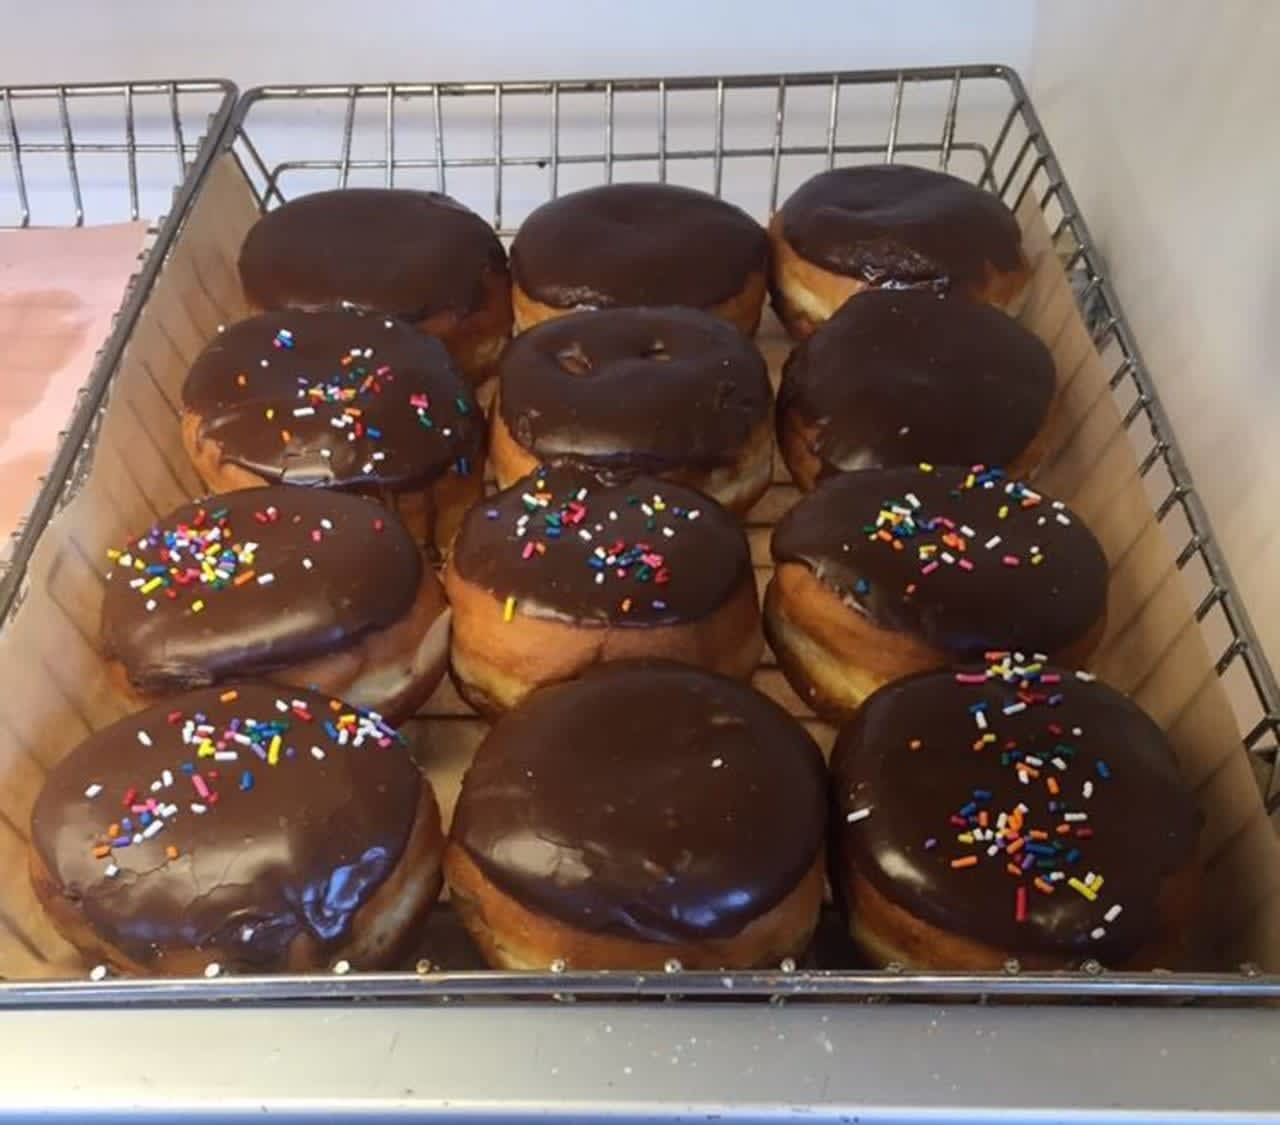 Boston creme doughnuts from Twin Donut.